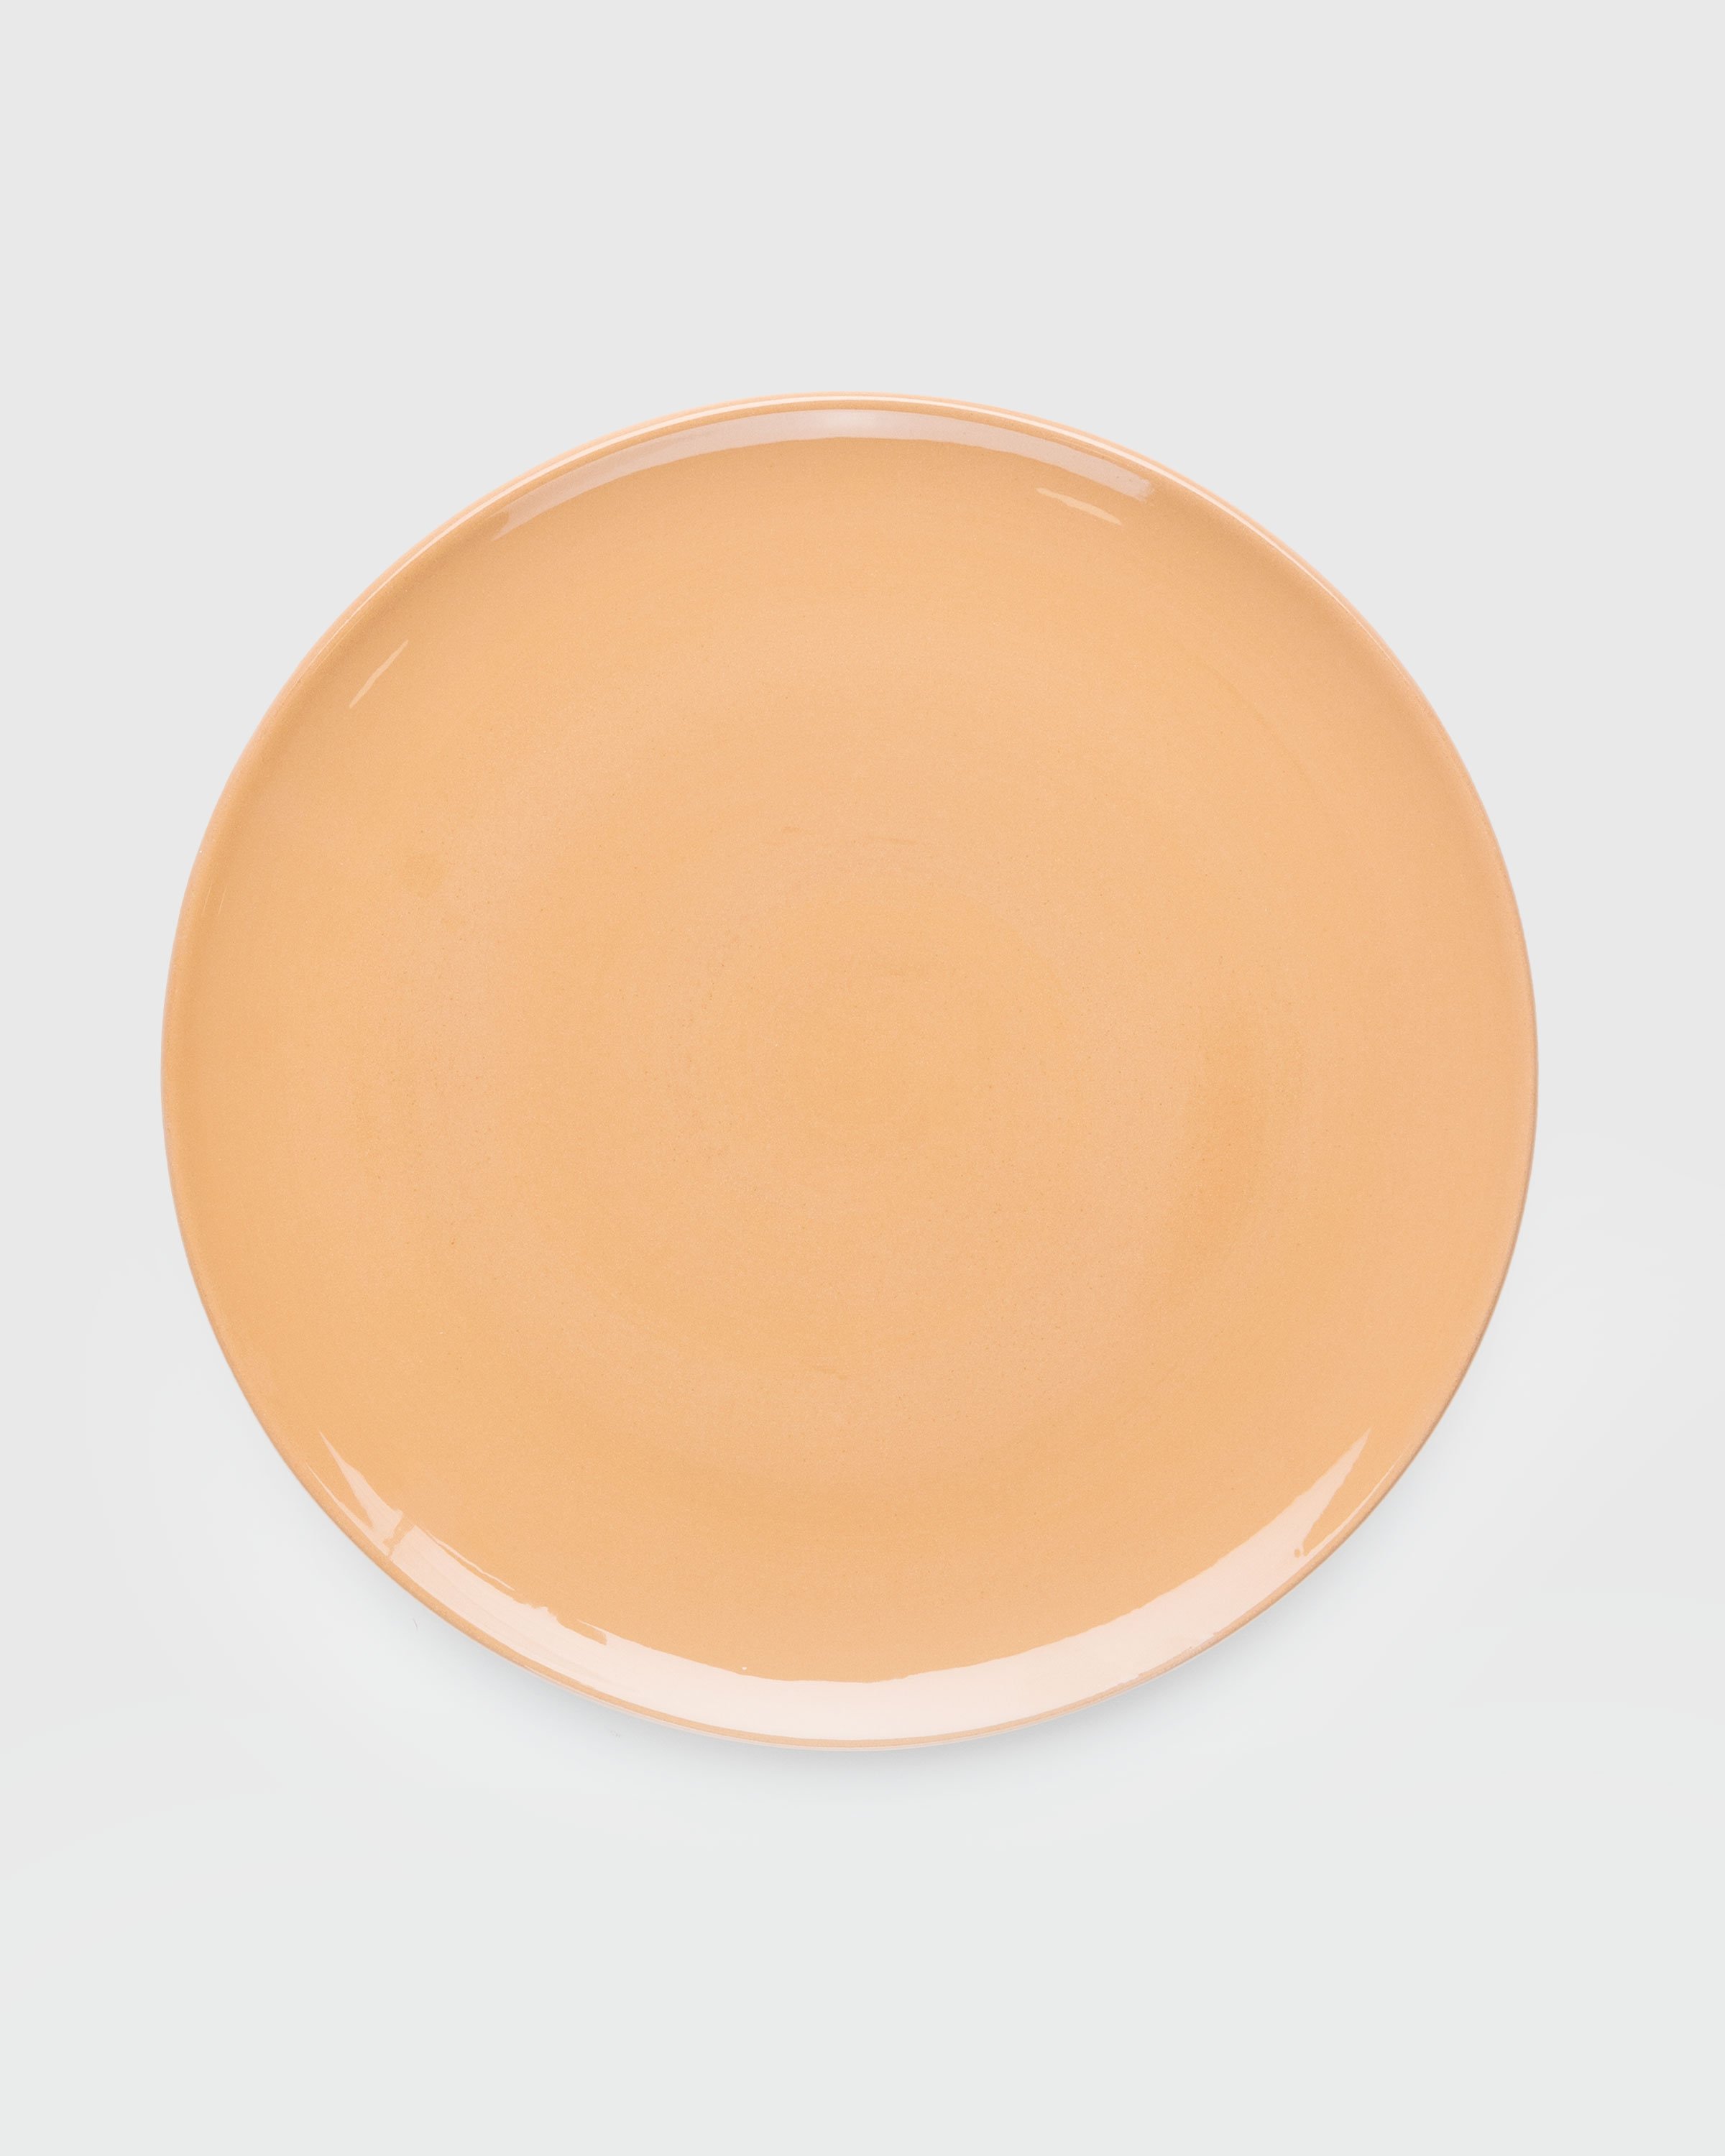 Sunnei - BELLISOTTO TERRACOTTA PLATES Orange - Lifestyle - Orange - Image 2